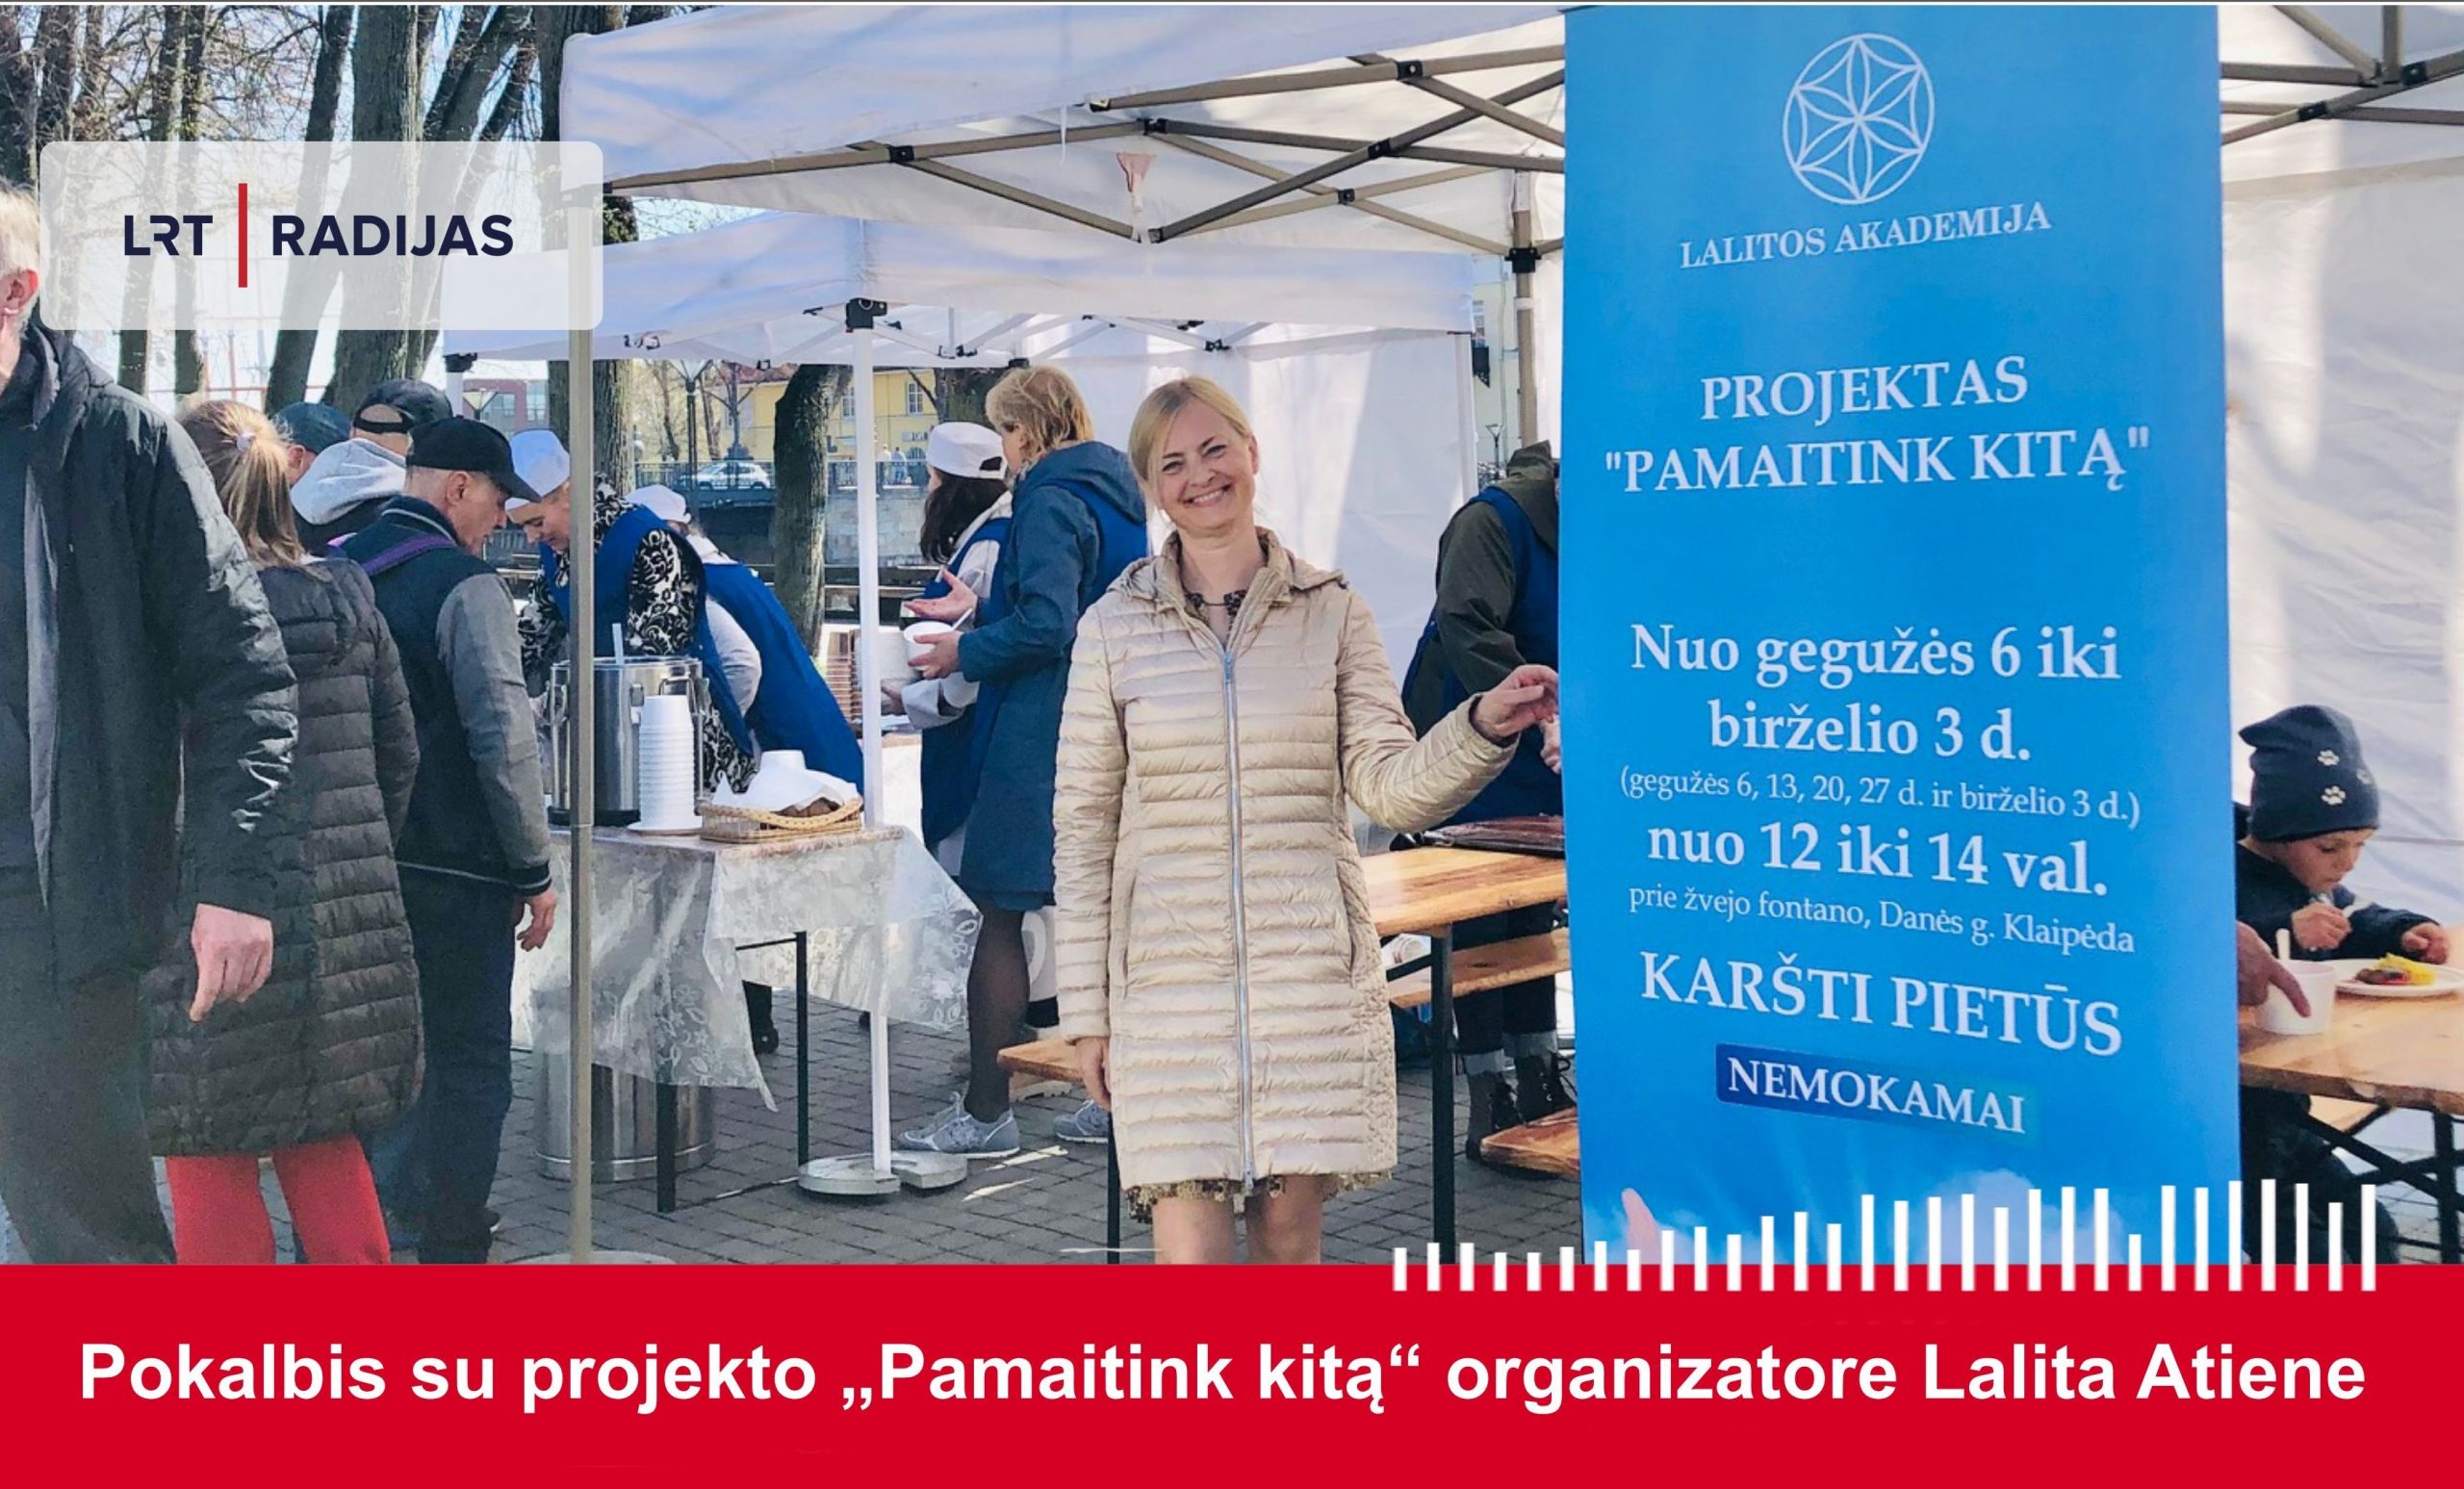 Read more about the article “PAMAITINK KITĄ” LRT RADIJAS STUDIJOJE